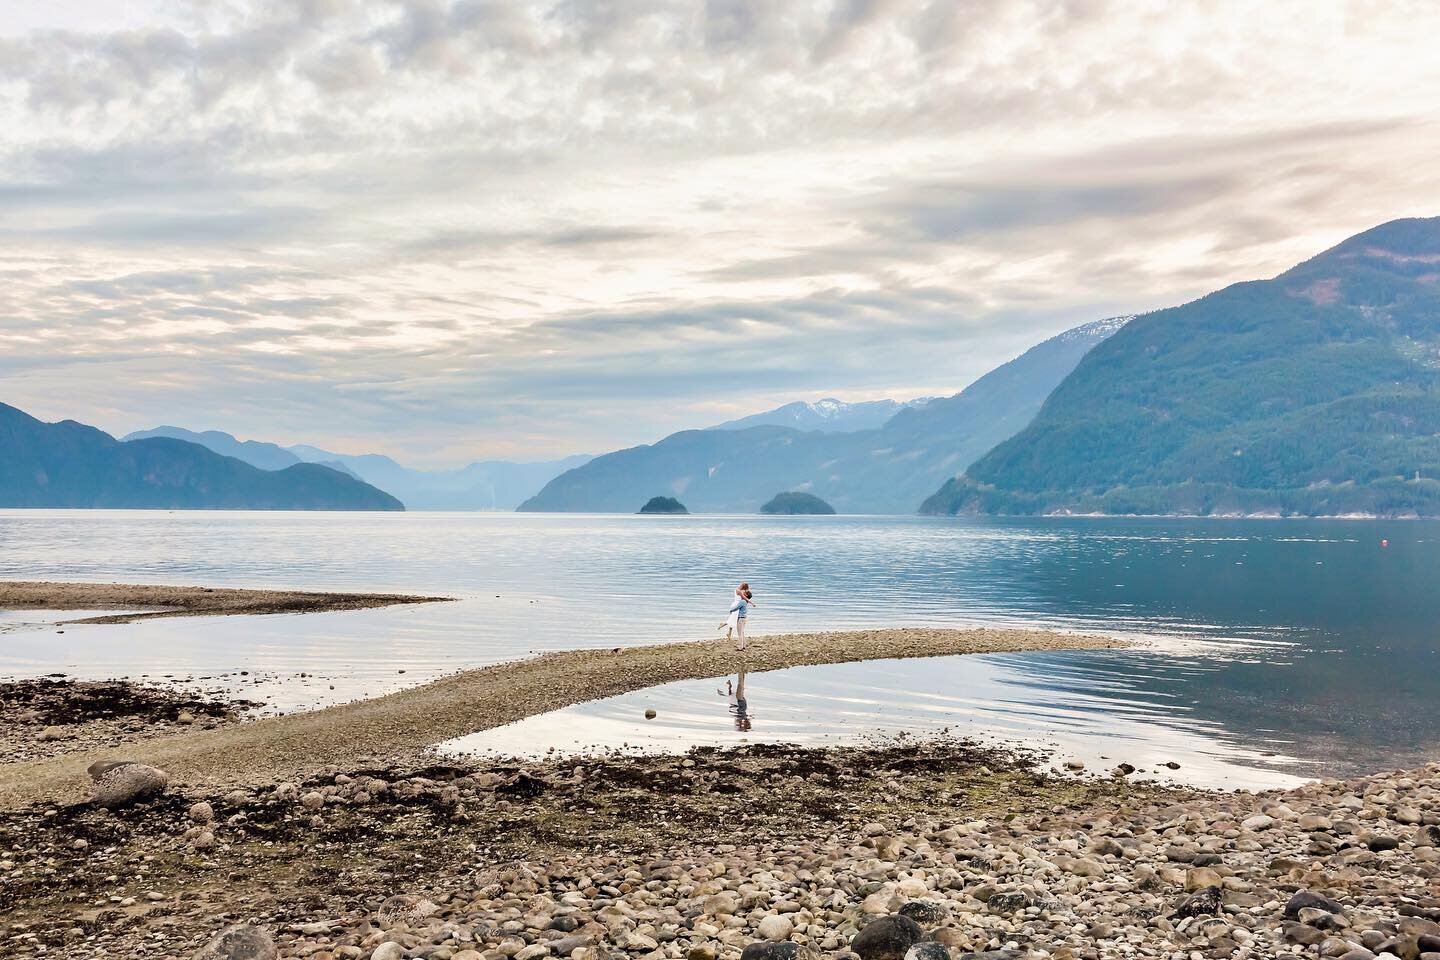 Wild love adventures along the BC coastline! 🏔🌊💞💫
#loveinthepnw #seatoskyengagementsession #summertimemagic